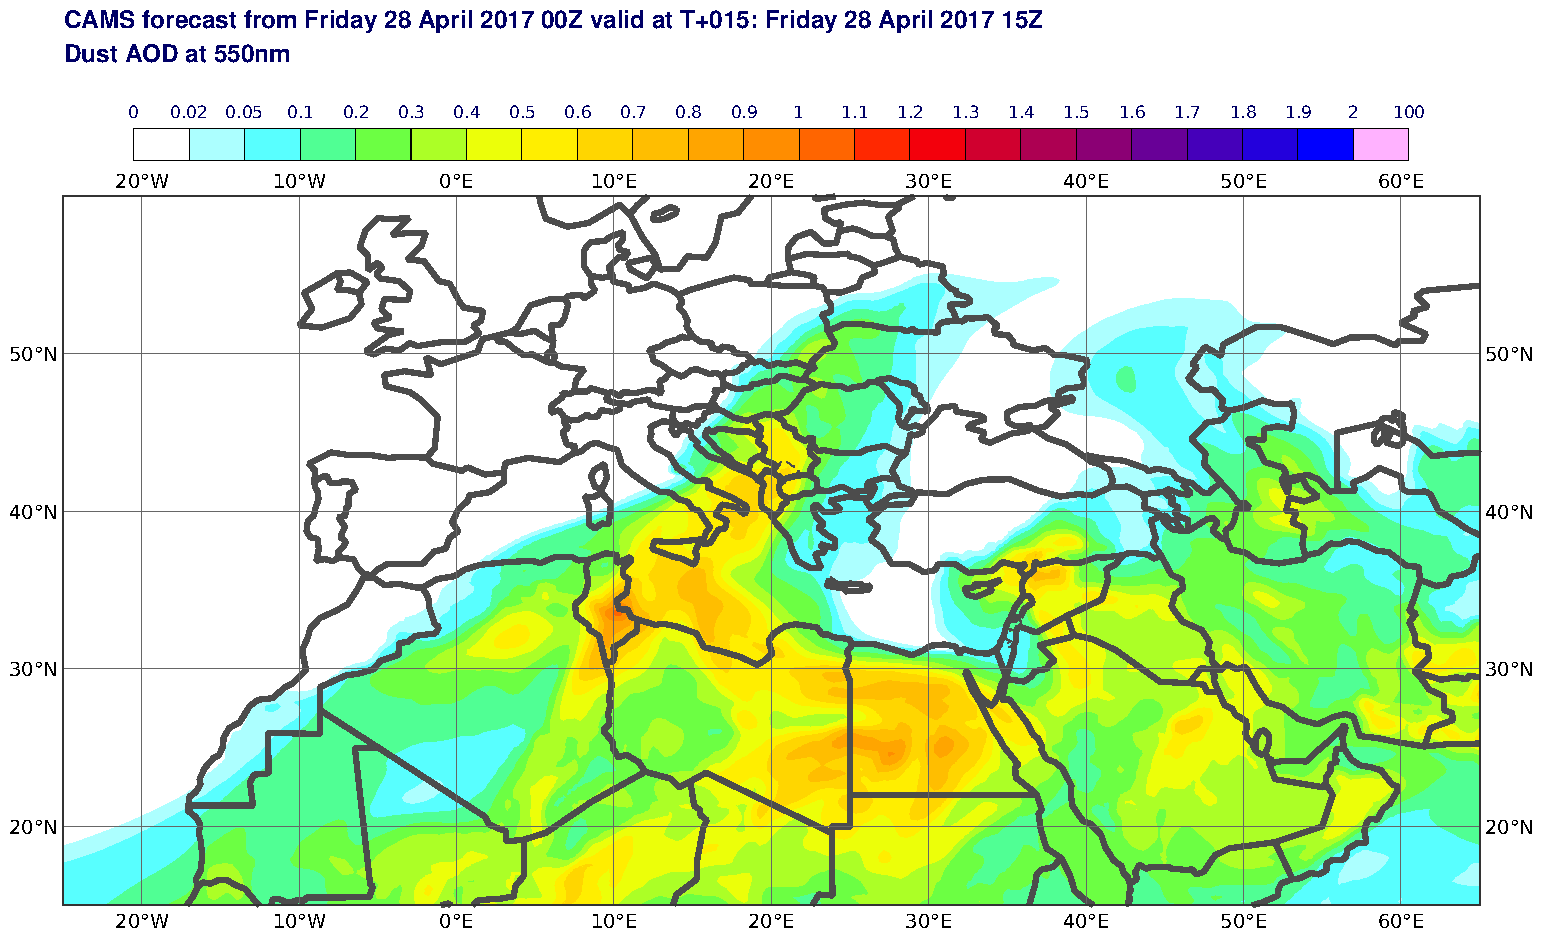 Dust AOD at 550nm valid at T15 - 2017-04-28 15:00